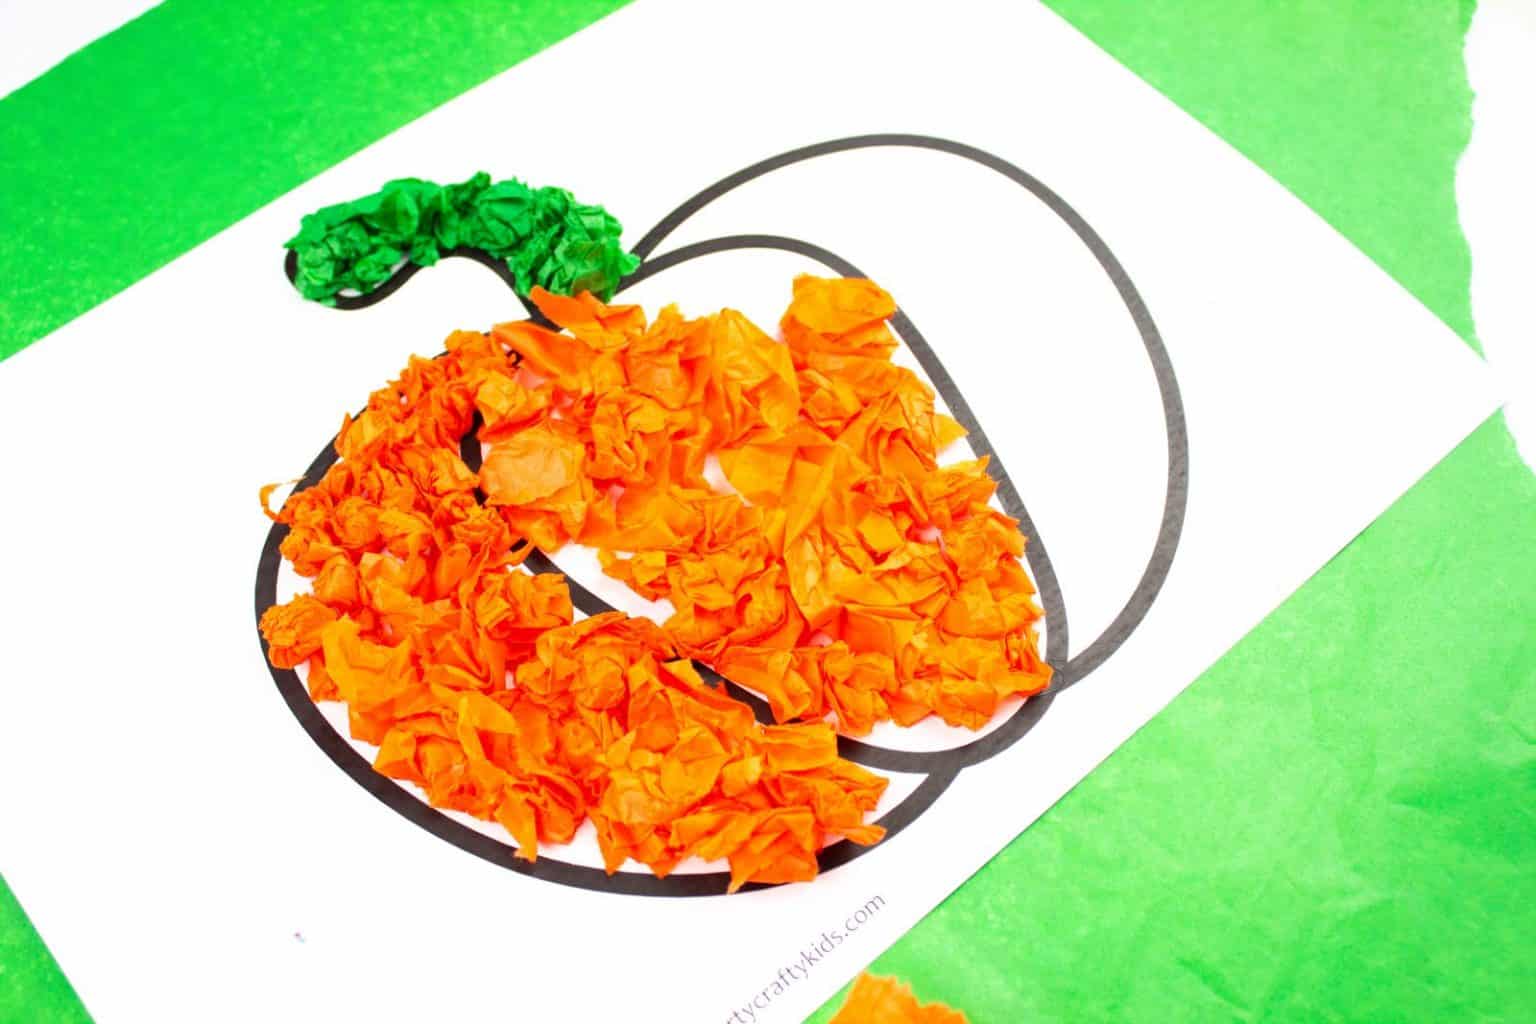 Arty Crafty Kids - Tissue Paper Pumpkin Craft for kids. A sweet Autumn or Halloween craft that's great for developing fine motor skills! #pumpkin #preschool #preschoolcraft #easykidscraft #craftsforkids #finemotor